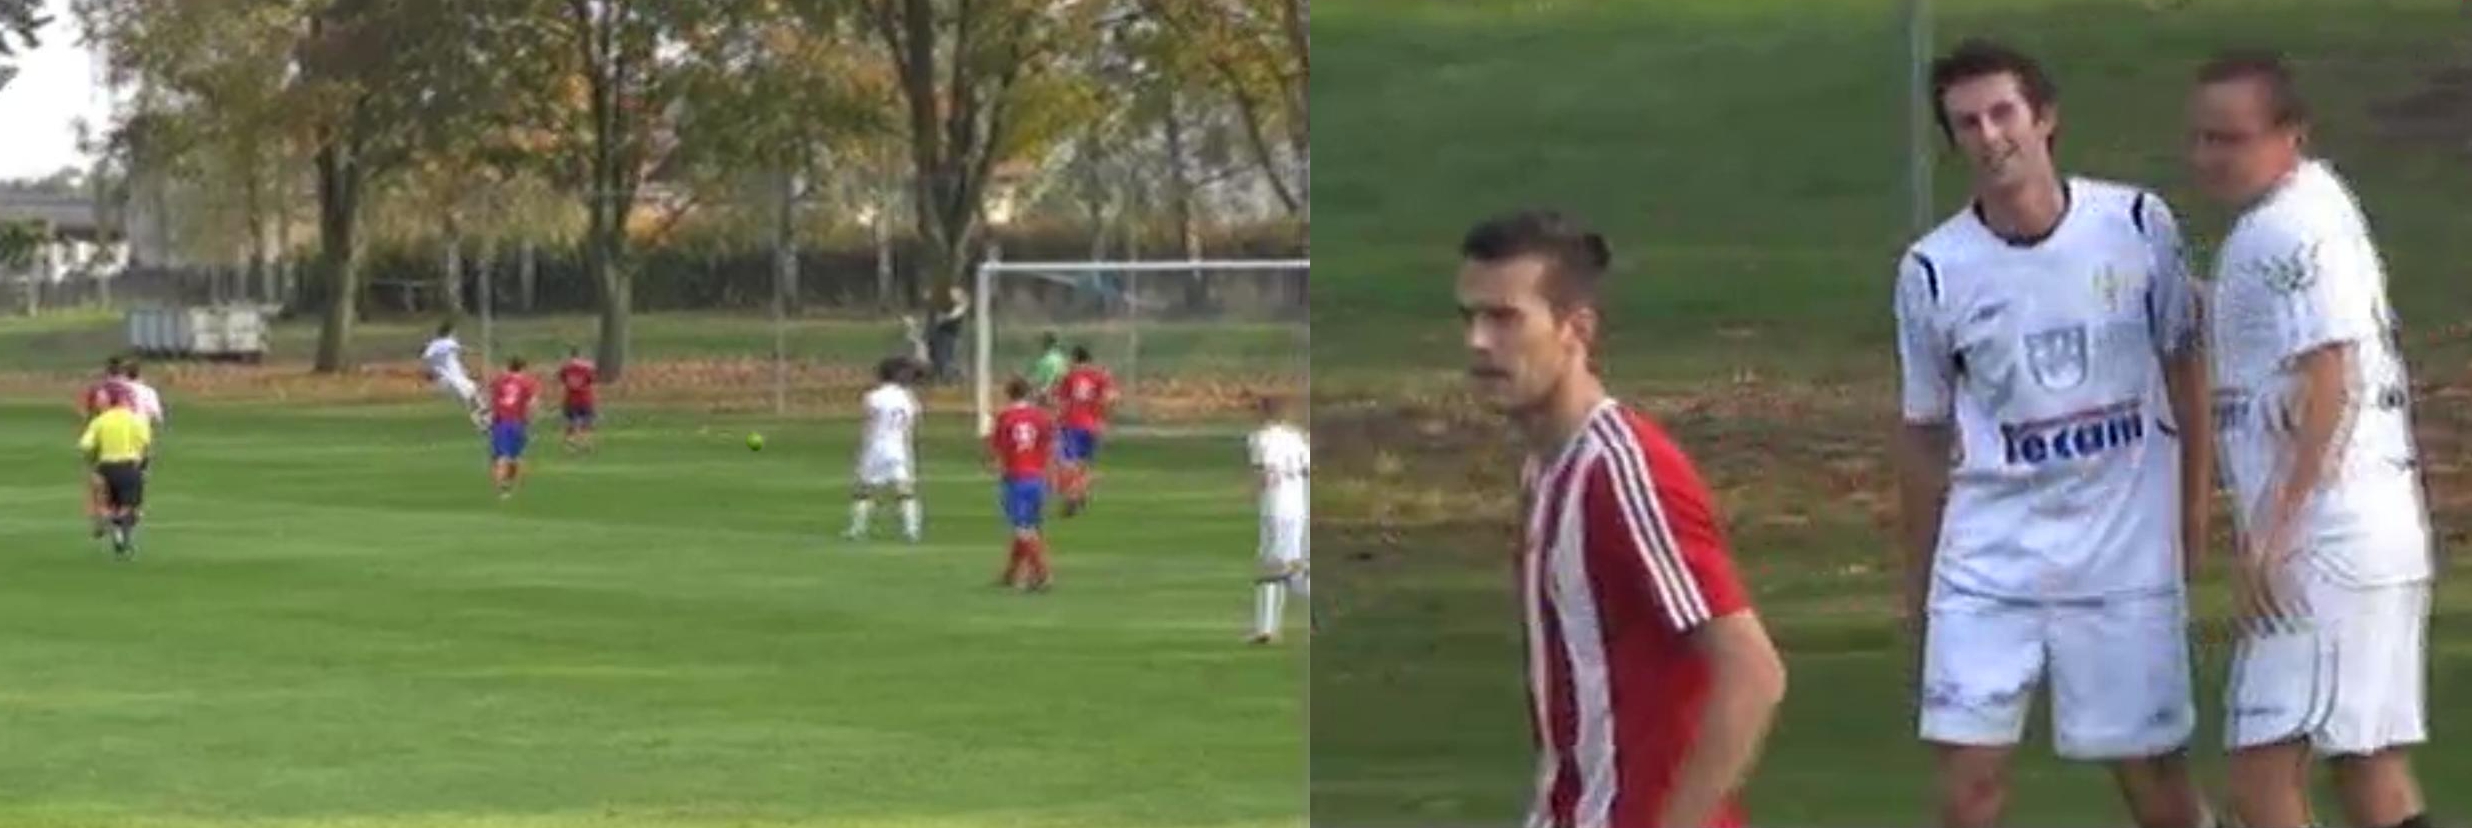 KP Sokol Kratonohy - FK Jaroměř 18.10.2014, foto z videa.